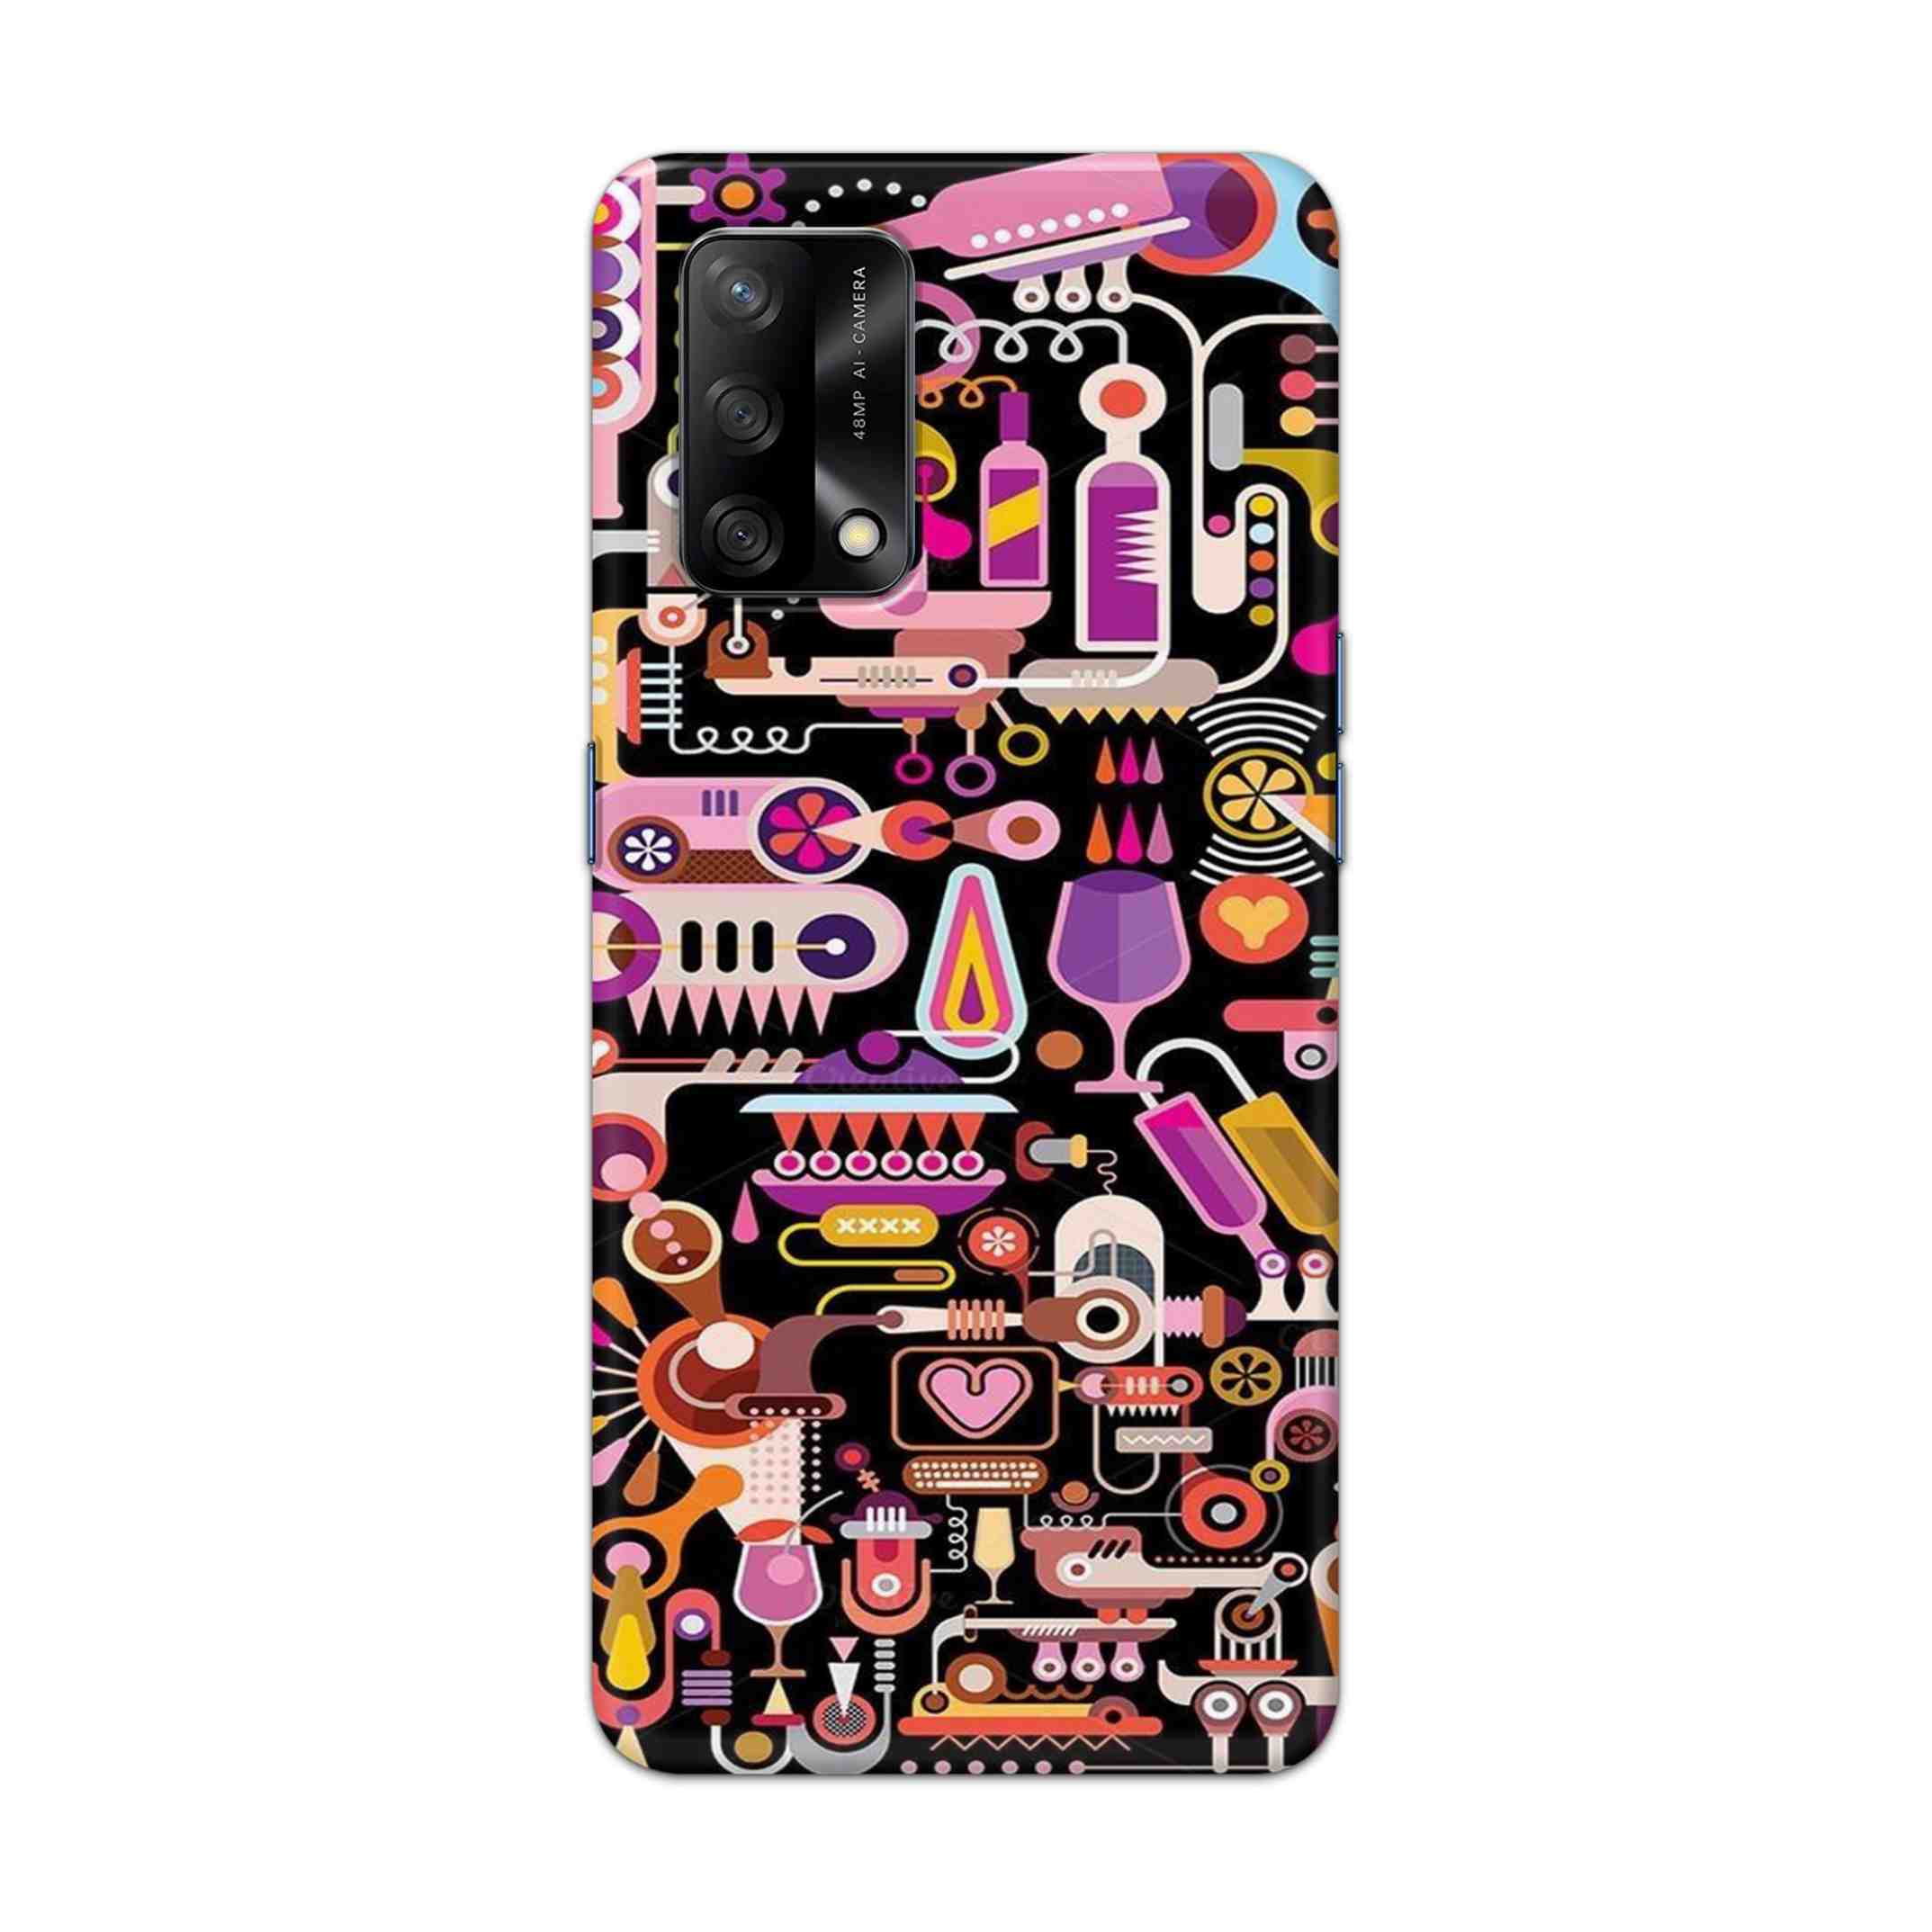 Buy Lab Art Hard Back Mobile Phone Case Cover For Oppo F19 Online